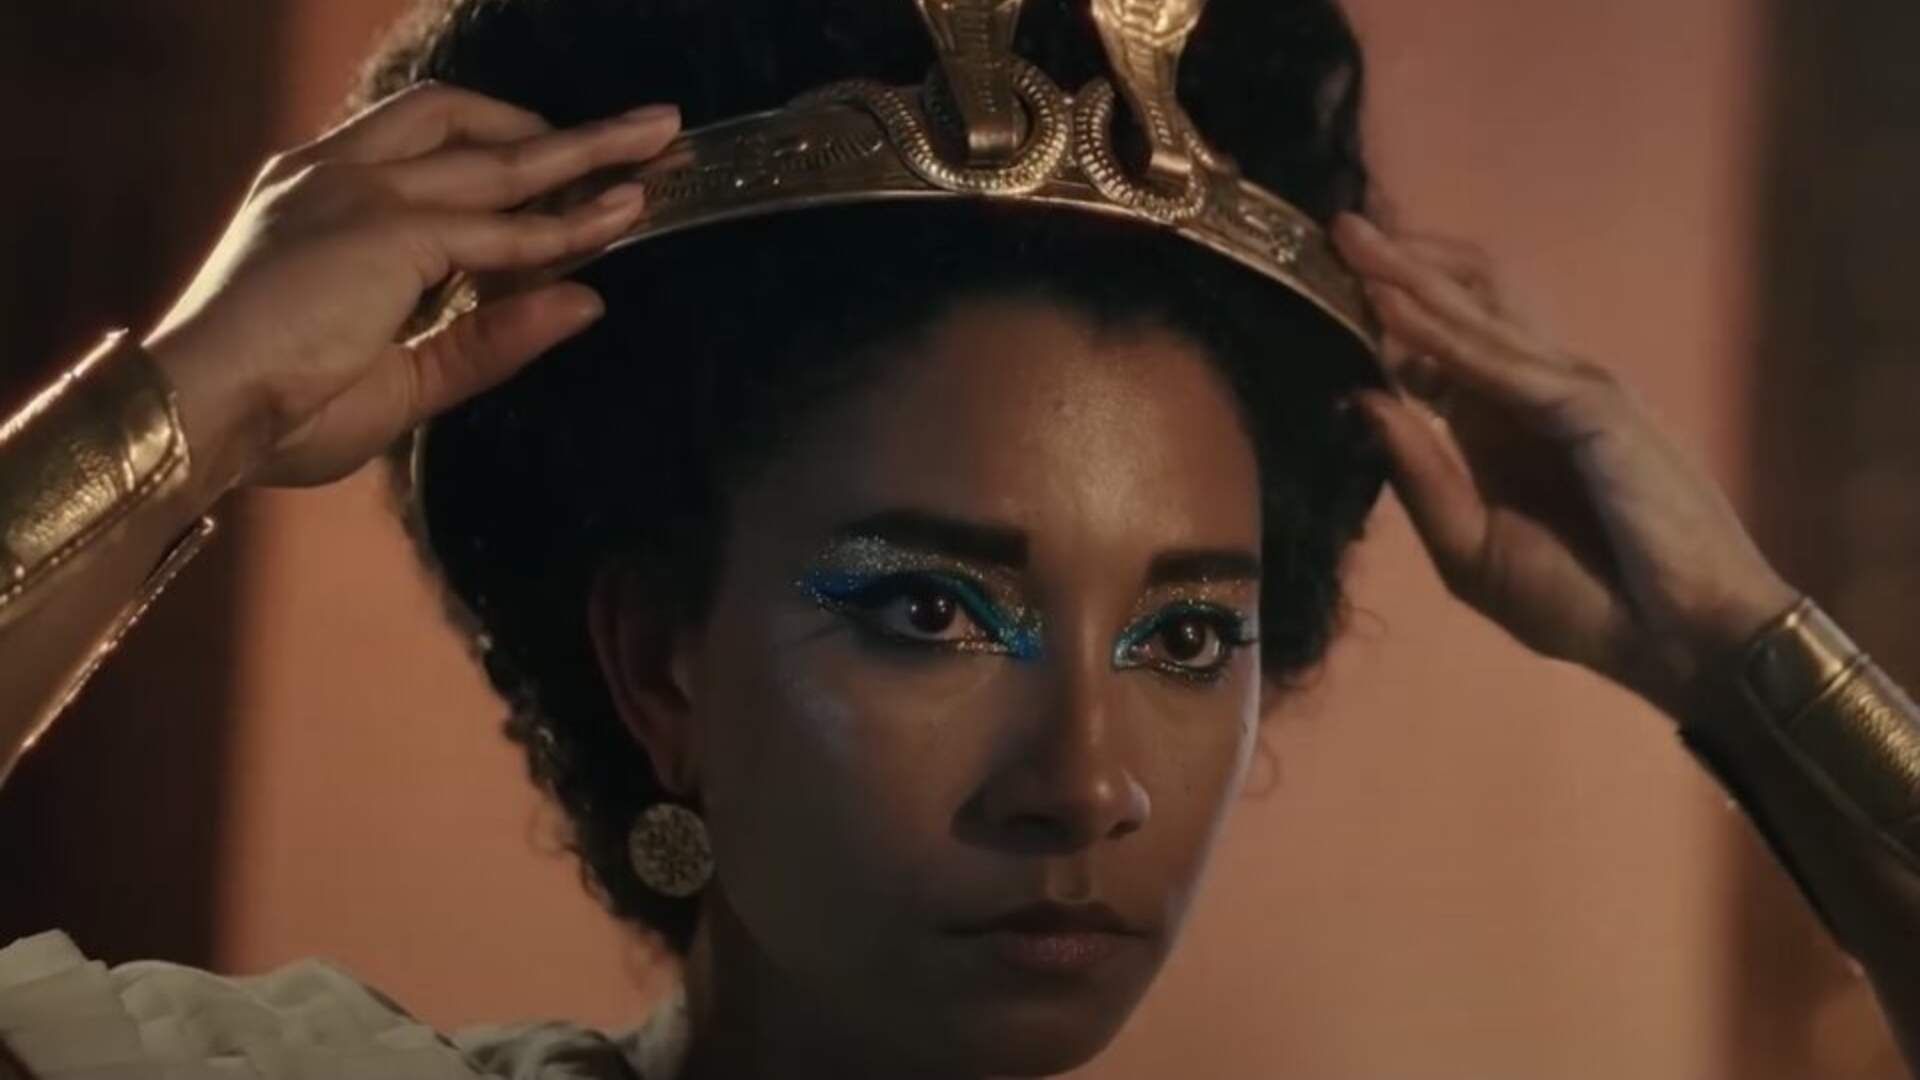 Rainha Cleópatra: Drama biográfico protagonizado por Adele James já está disponível na Netflix